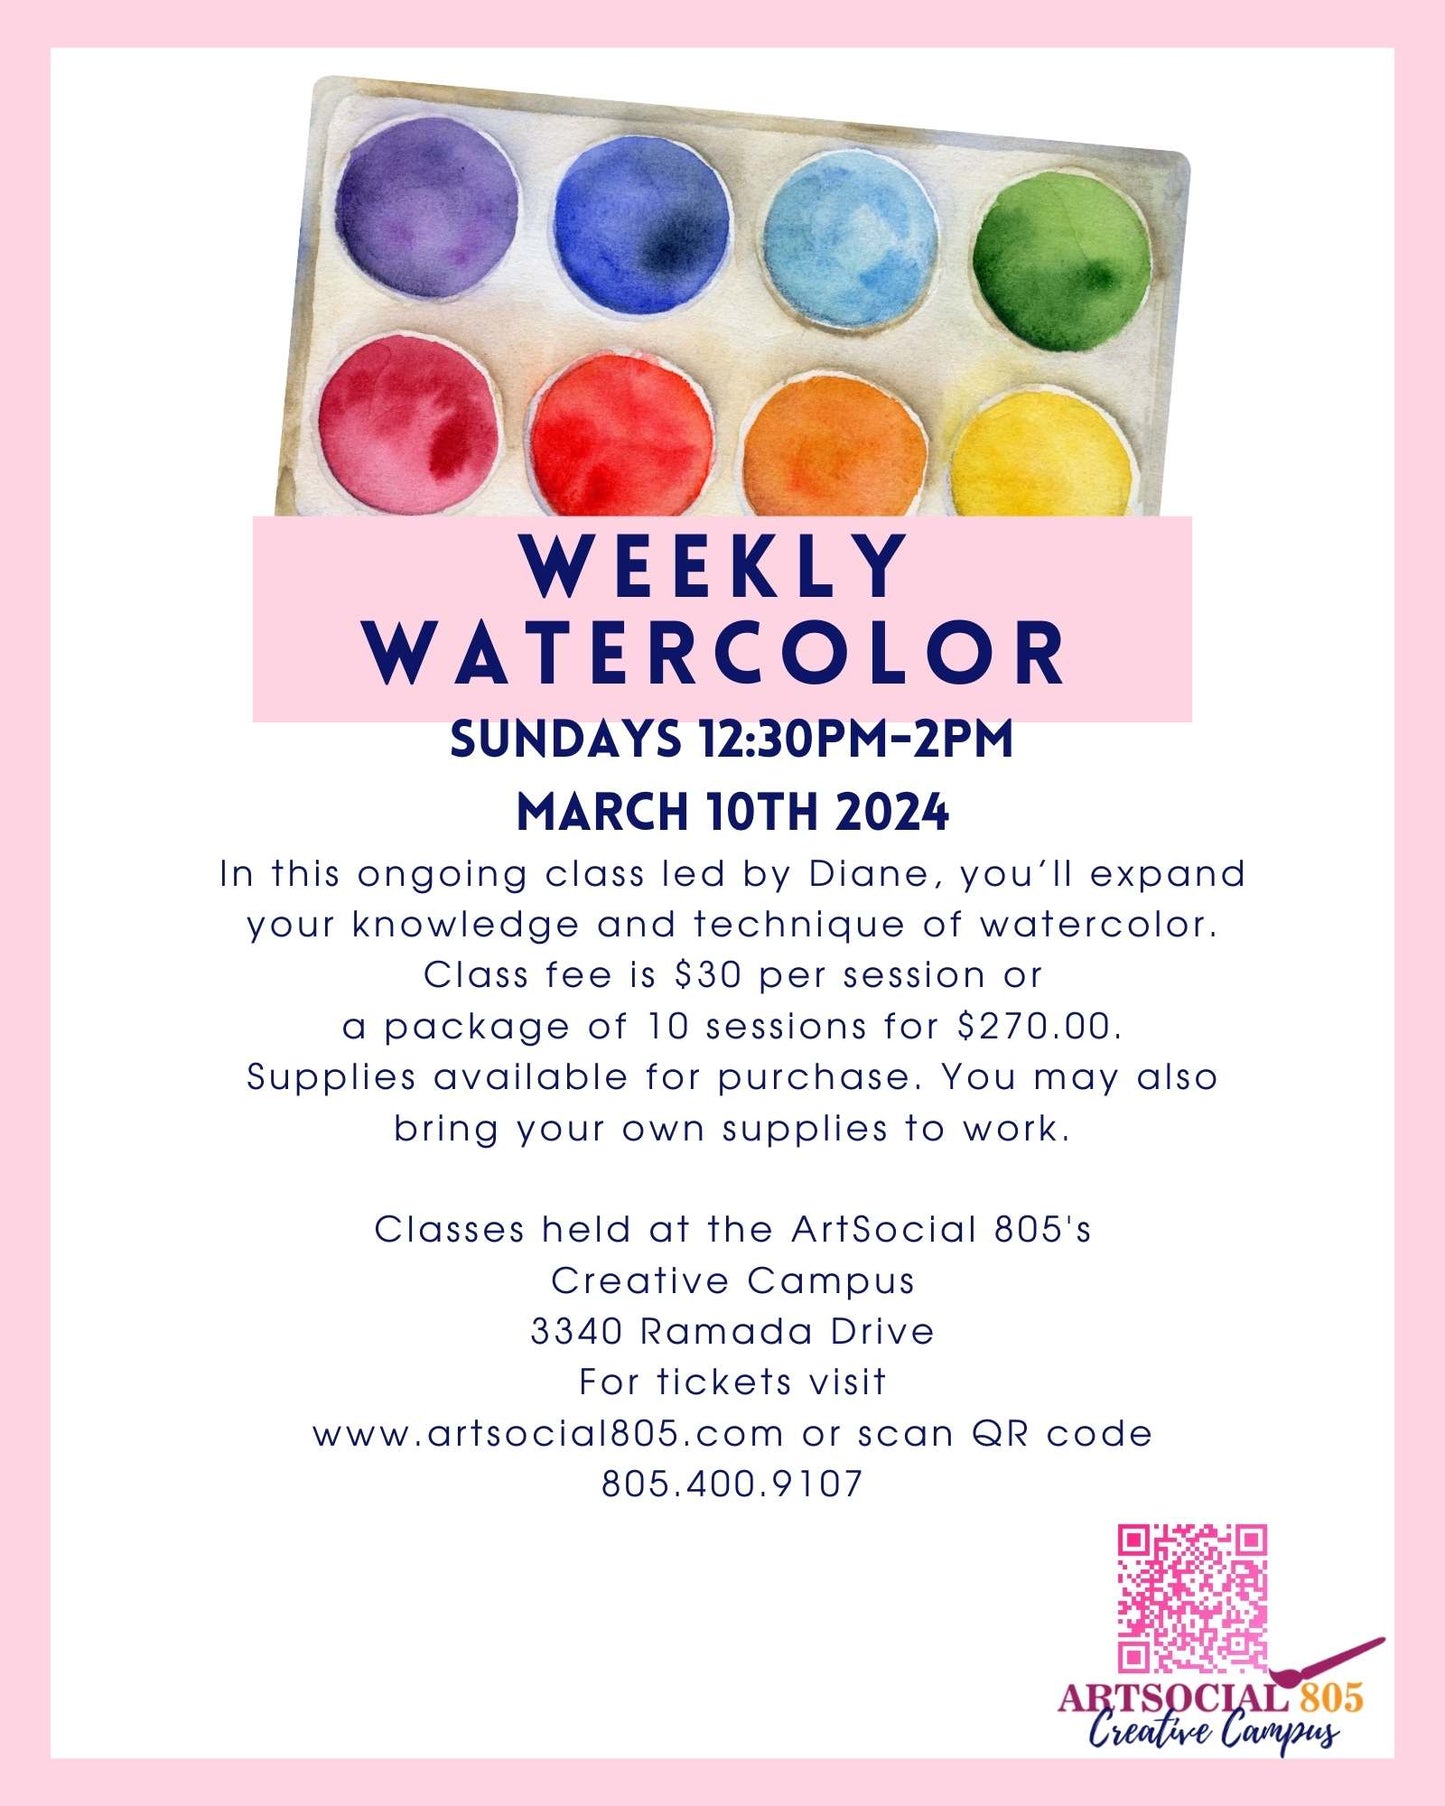 Weekly Water Color at the ArtSocial 805 Creative Campus